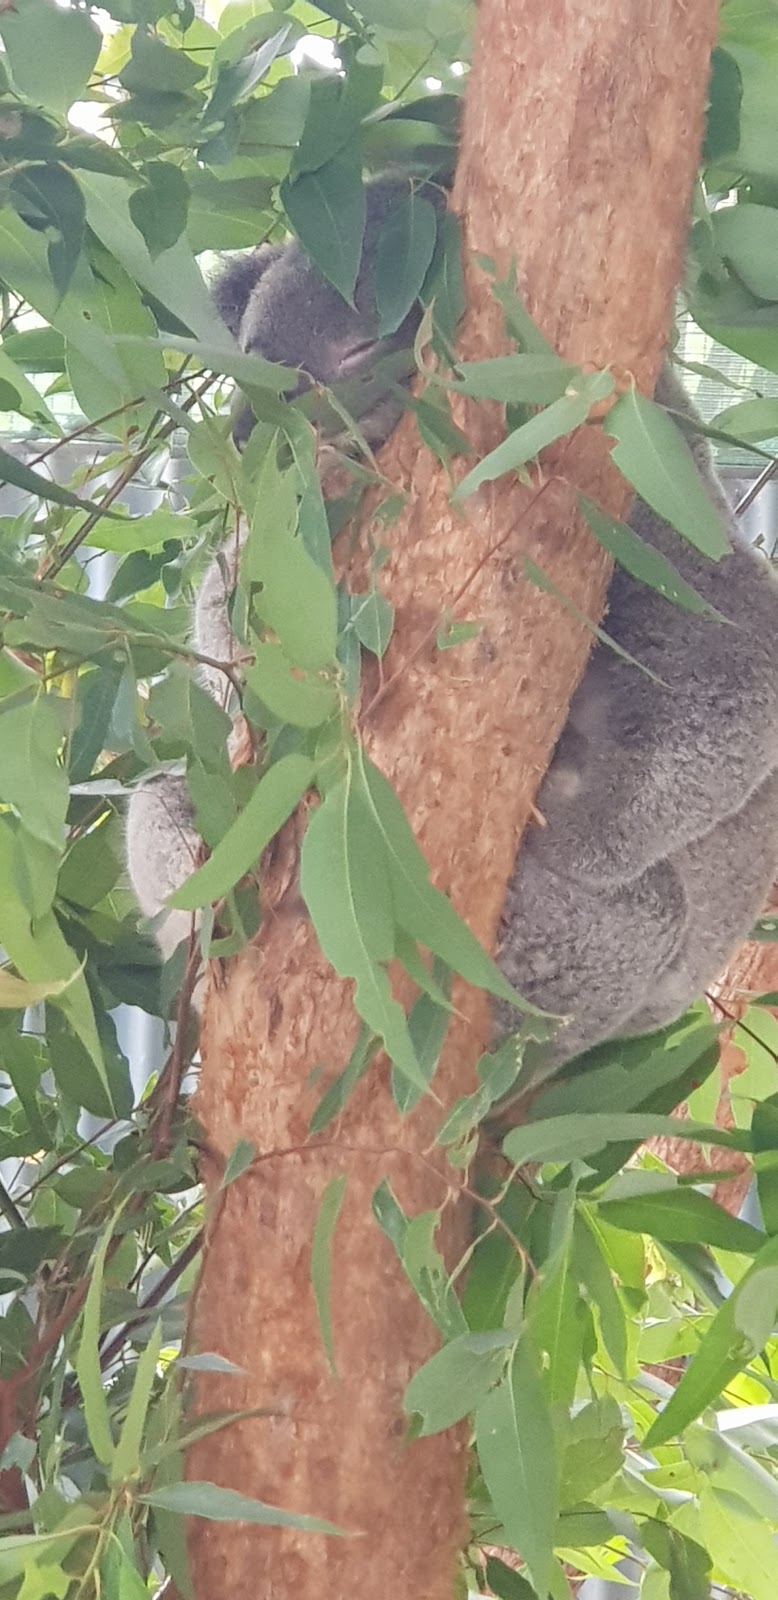 Jean Shaw Koala Reserve | Myall St, Hawks Nest NSW 2324, Australia | Phone: (02) 4997 0878